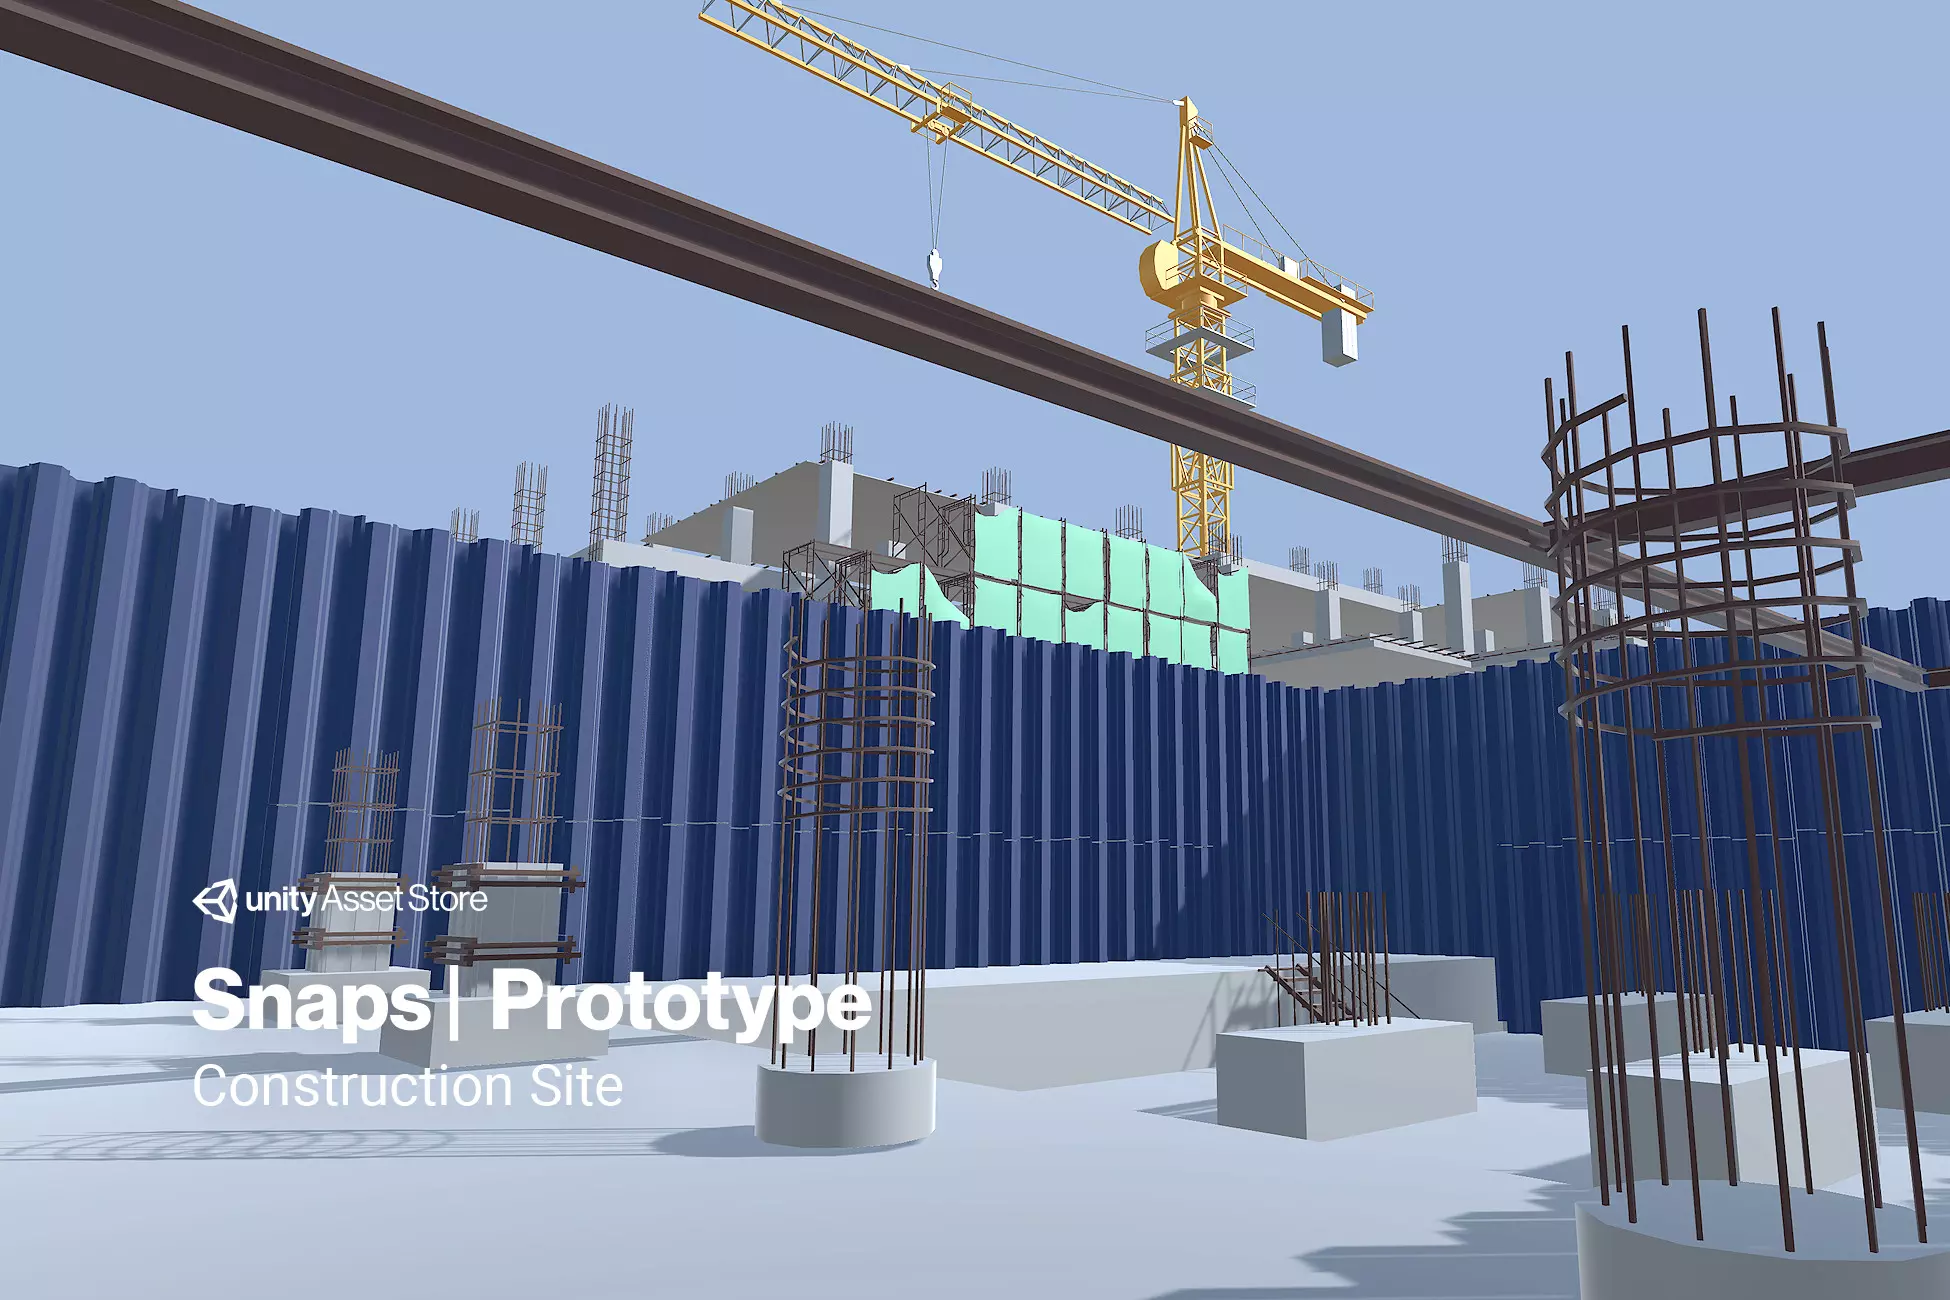 Unity Asset Snaps Prototype Construction Site free download